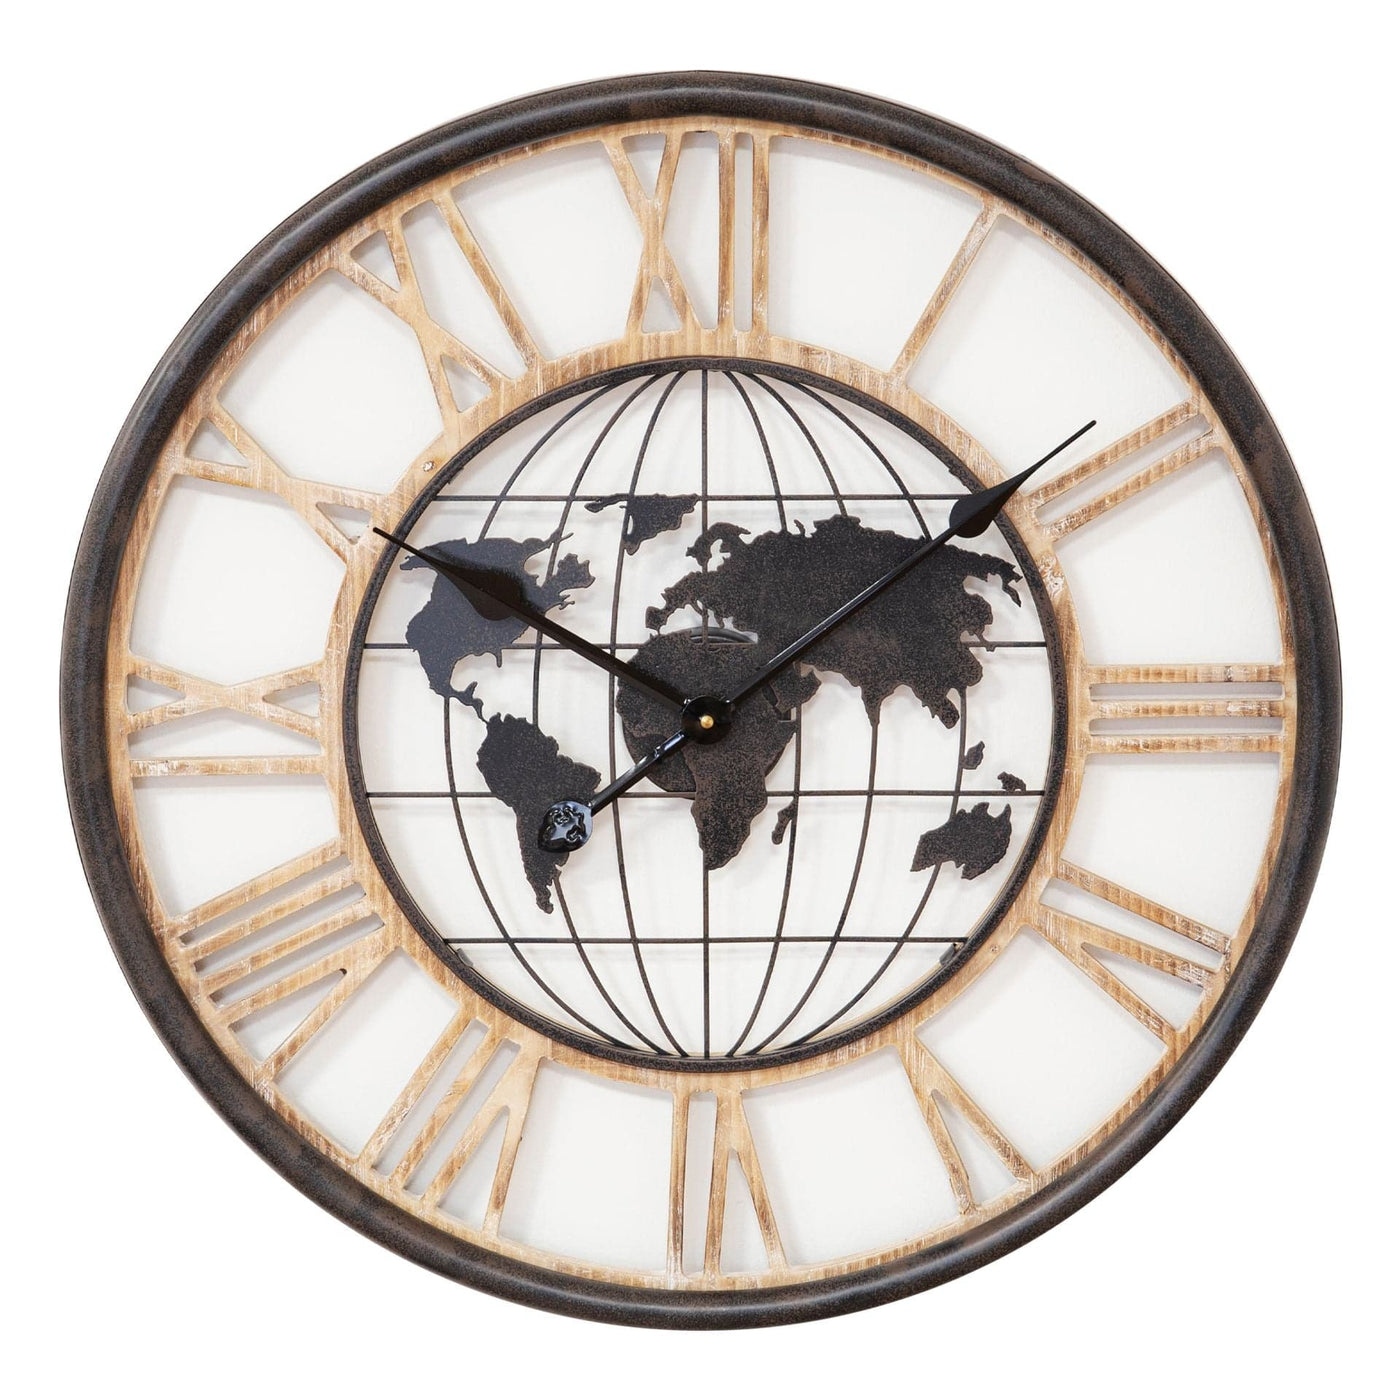 Wrendale Designs Wall Clocks World Design Wood and Metal Wall Clock